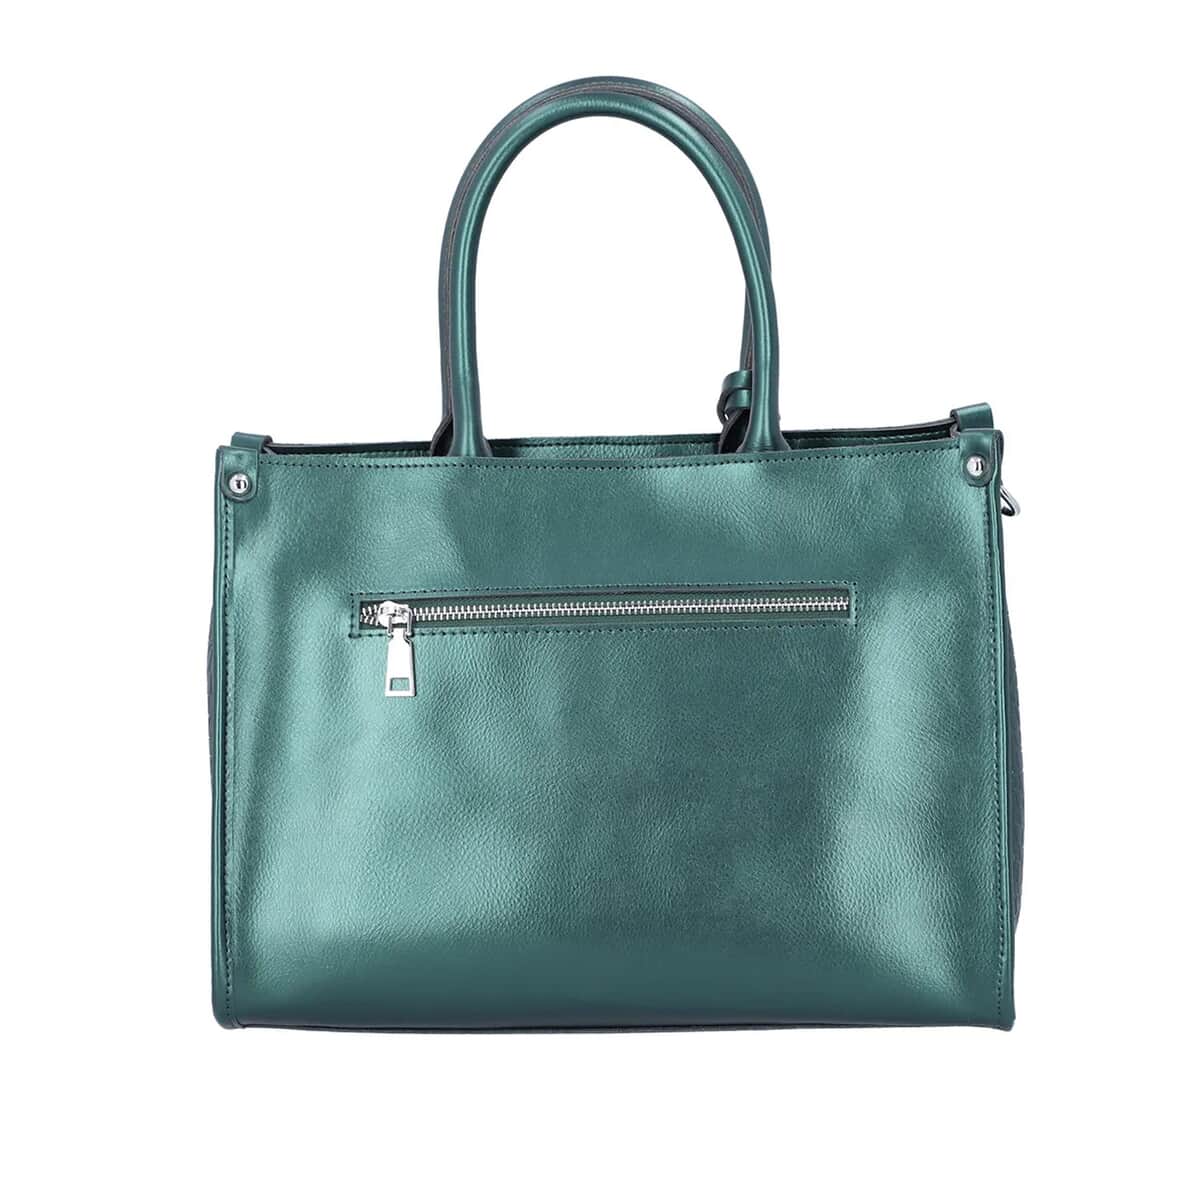 Green Crocodile Pattern Genuine Leather Convertible Bag with Detachable Shoulder Strap, Leather Handbag, Crossbody Bag, Purse, Leather Bag for Women image number 0